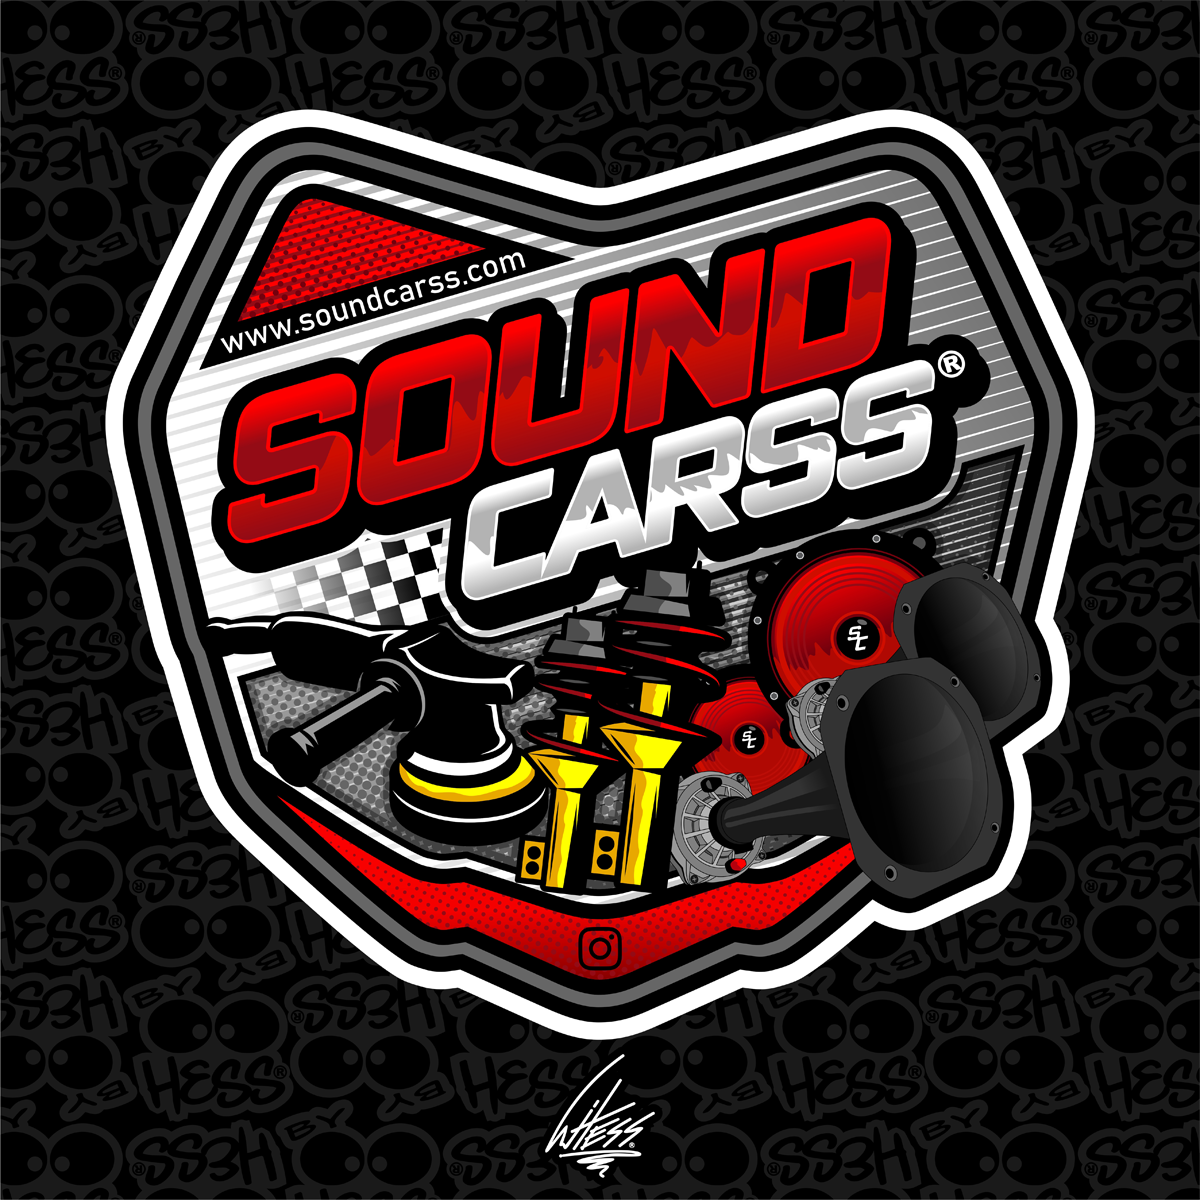 SOUND-CARSS